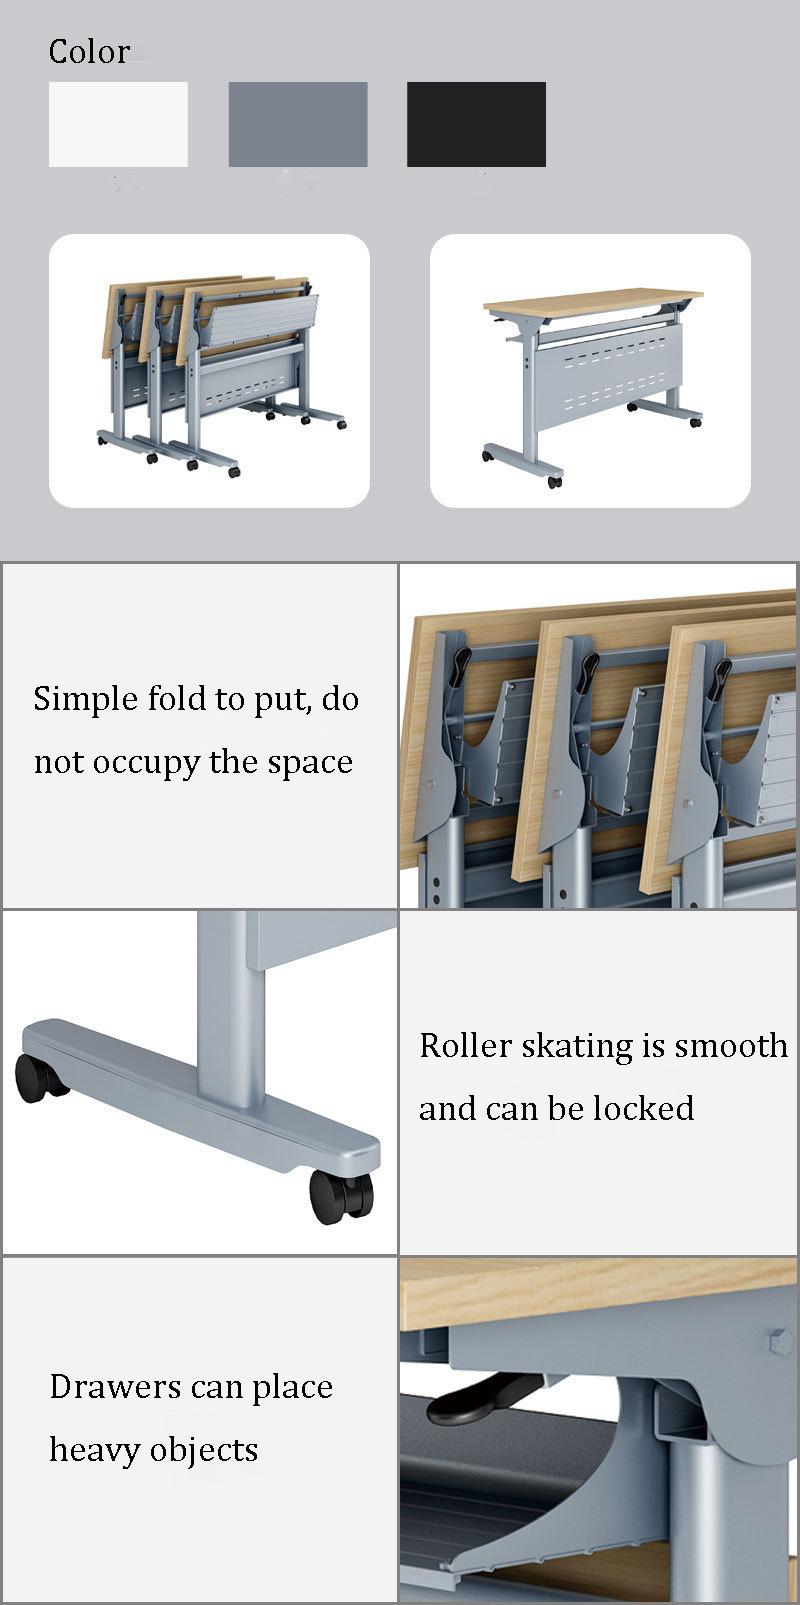 Riser Adjustable Working Ergonomic Table Folding Desk with Wheels Office Meeting Training Folding Study Table